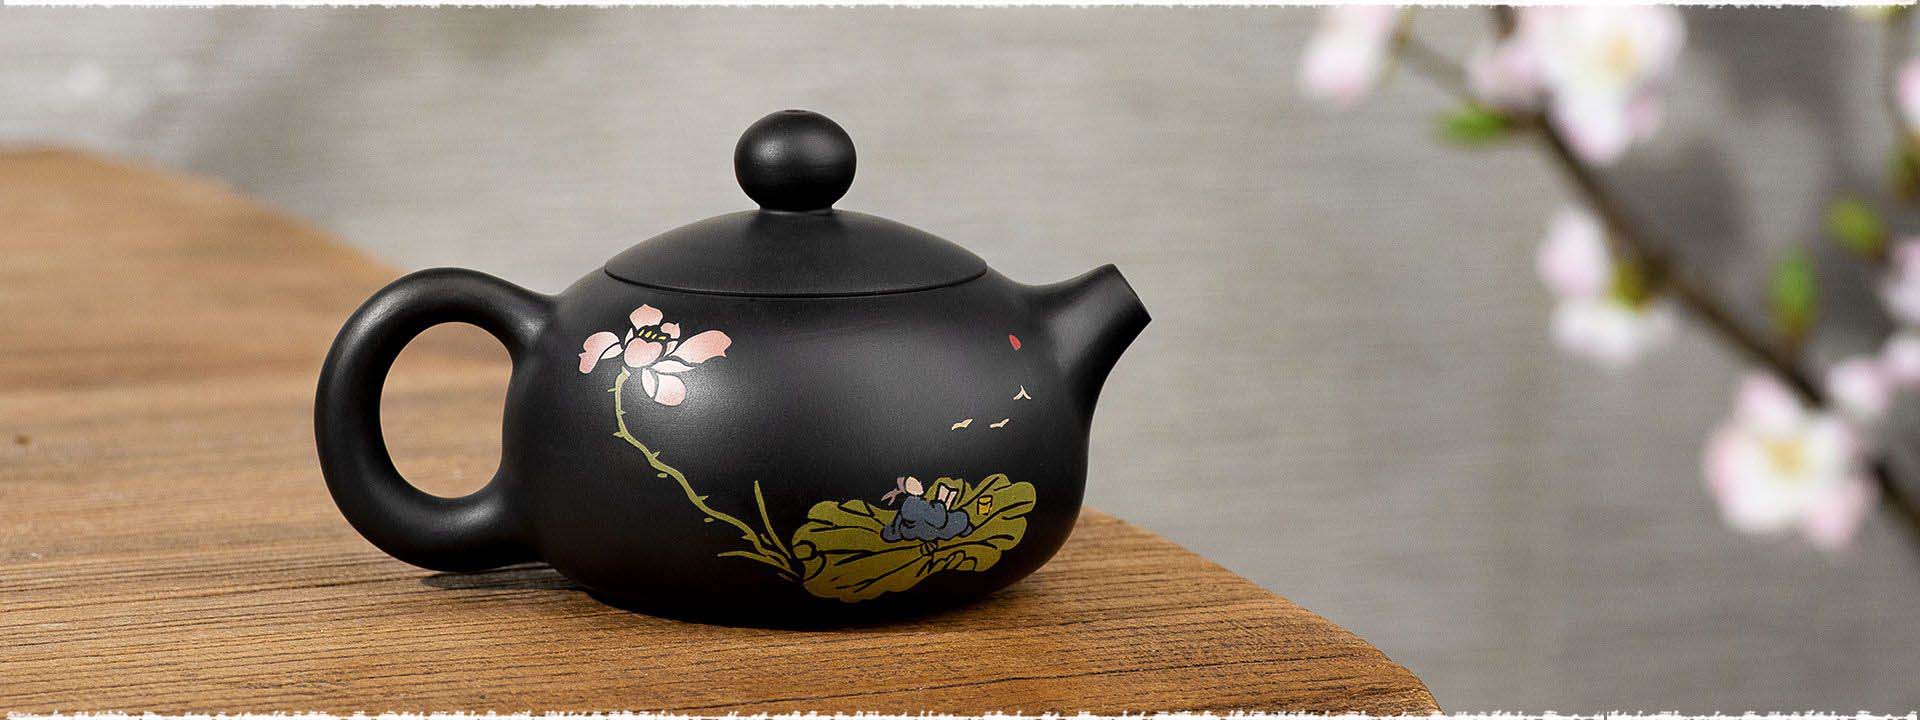 Jianshui Zi Tao Purple Pottery Teapot – One of China’s Four Famous Pottery